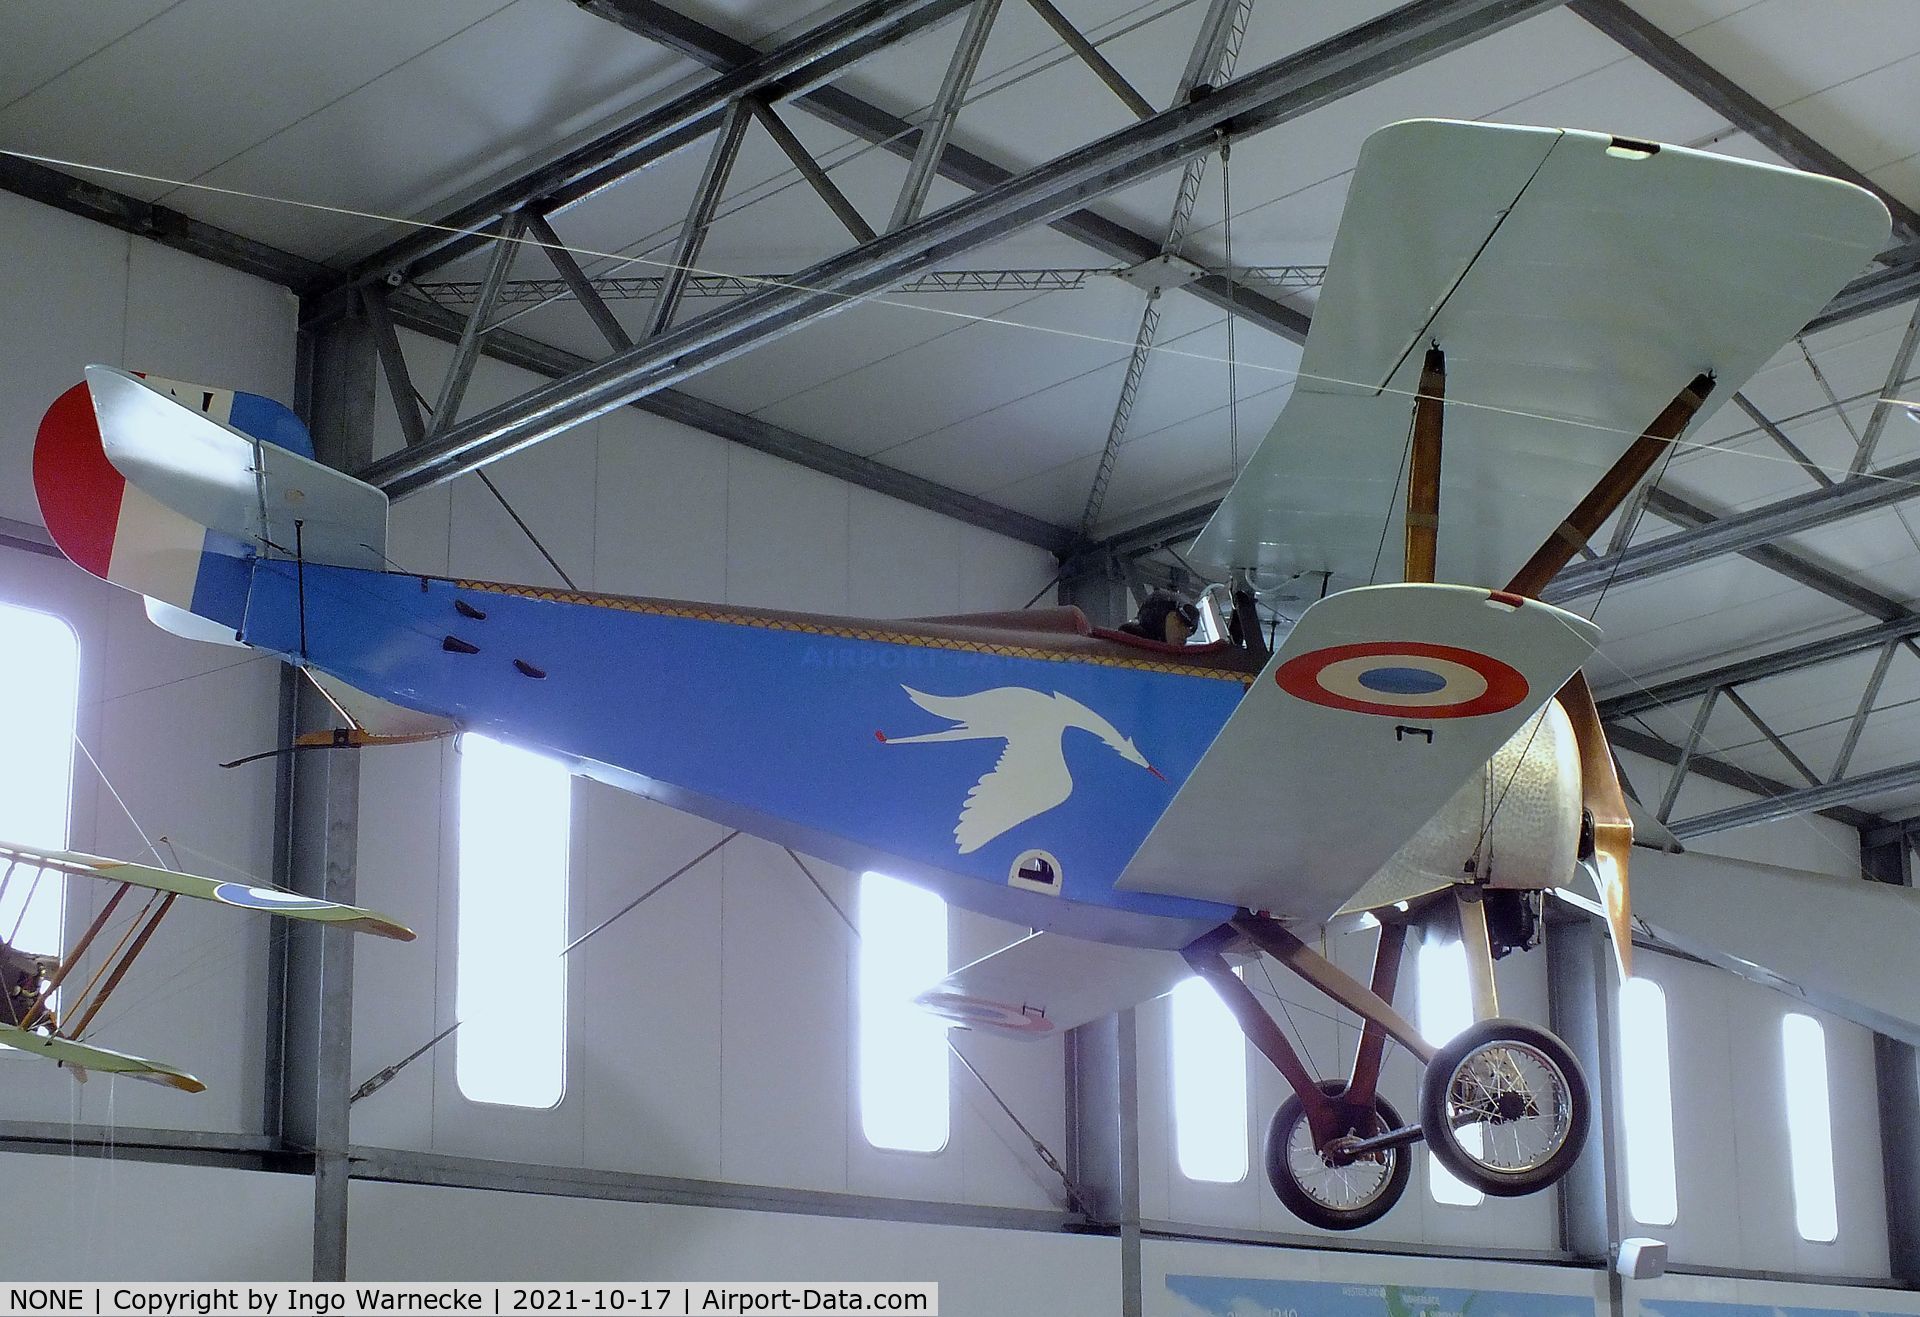 NONE, Nieuport 17 replica C/N unknown_Laatzen, Nieuport 17 replica at the Luftfahrtmuseum Laatzen, Laatzen (Hannover)